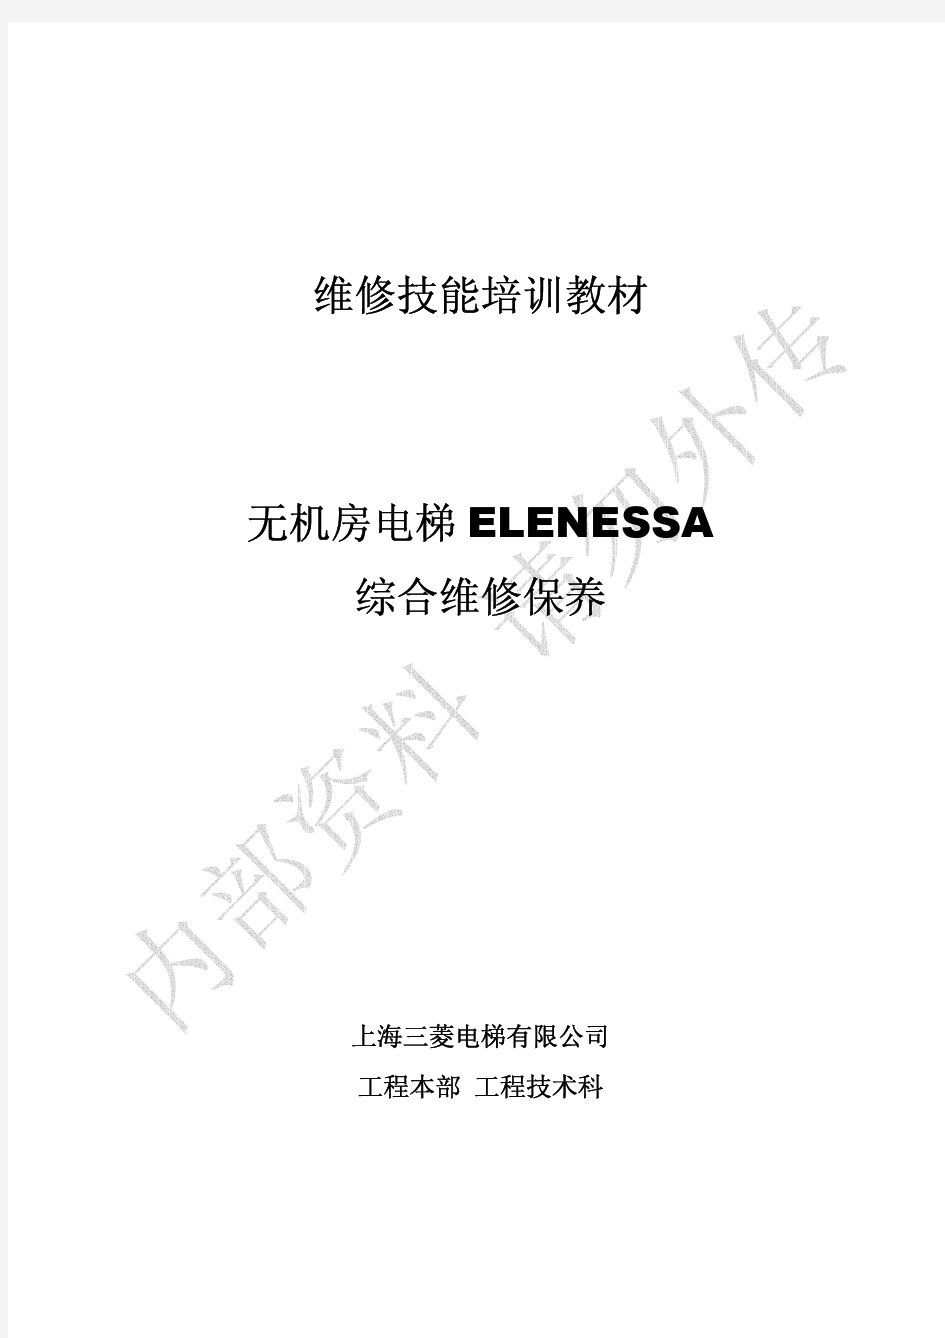 ELENESSA综合维修技能培训教材0602